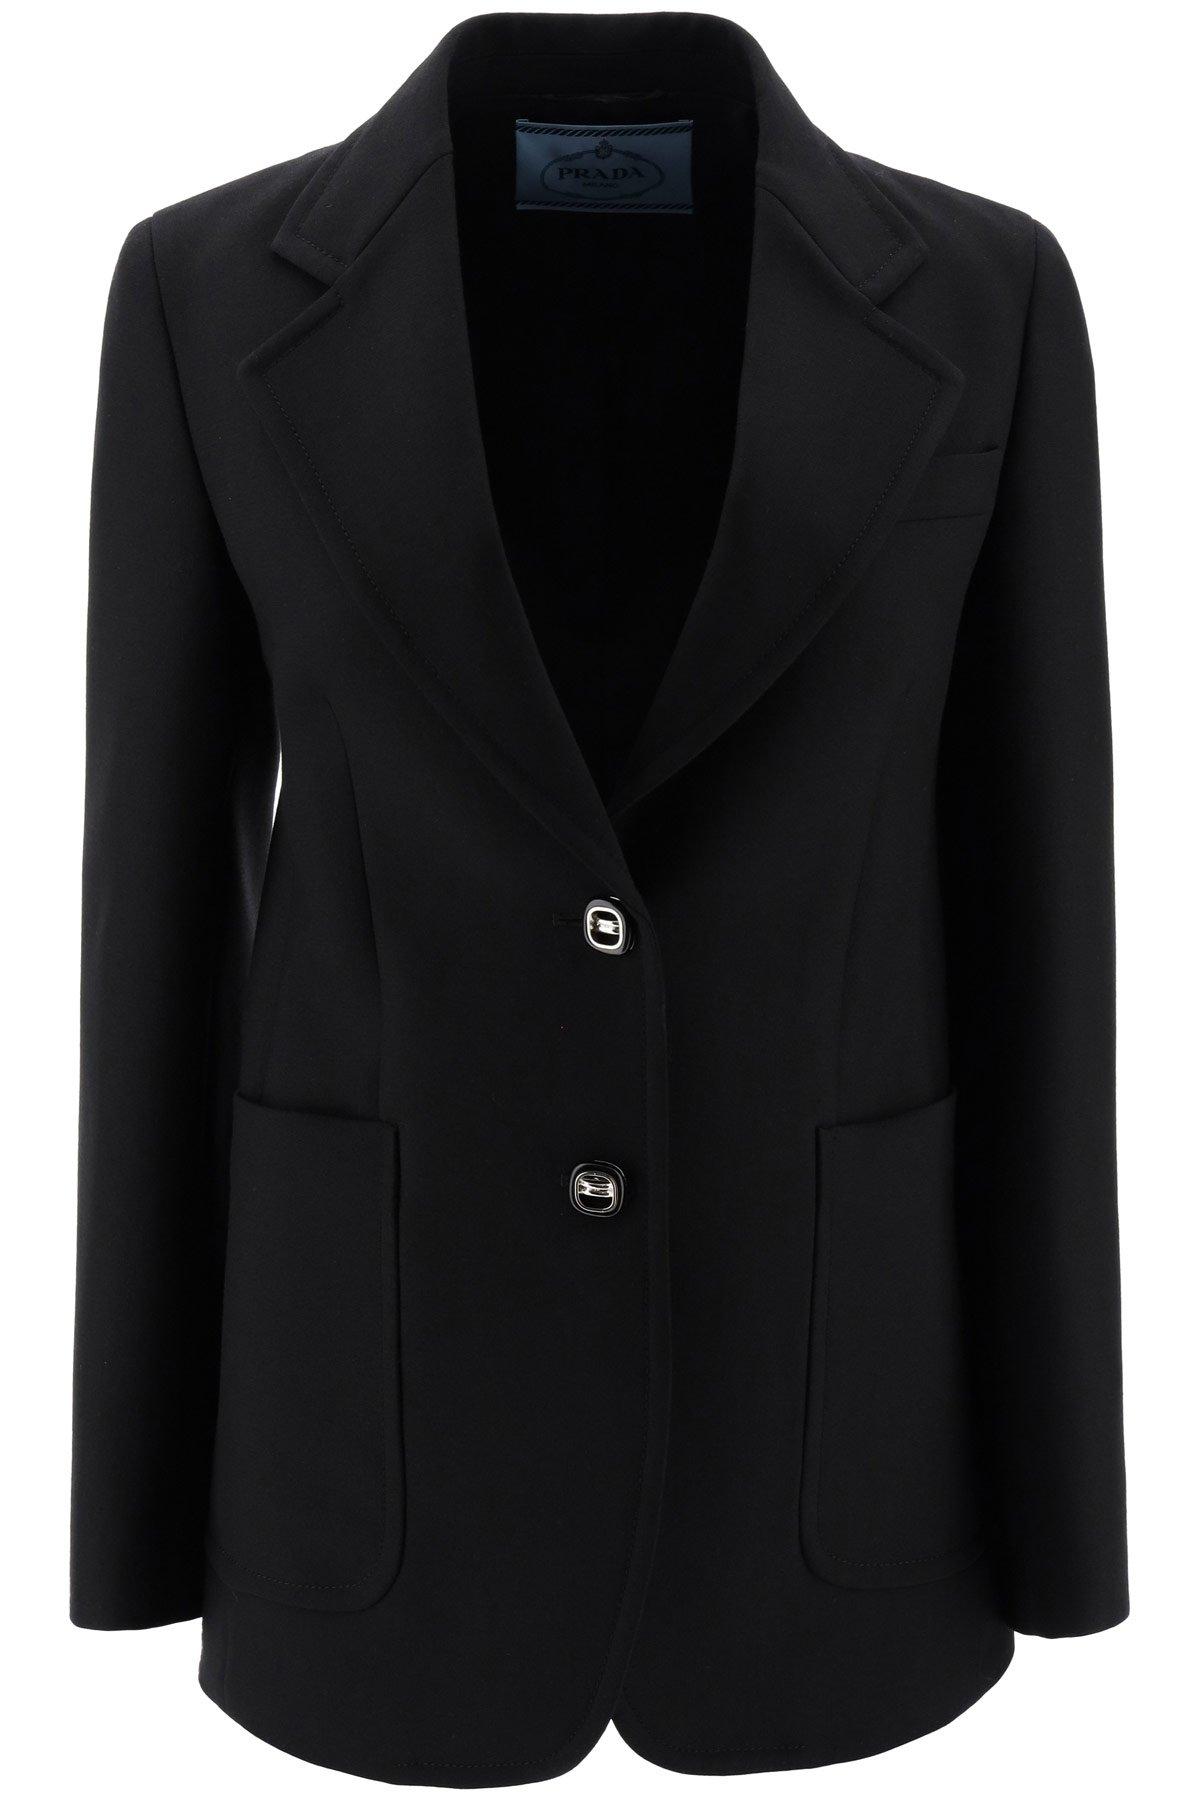 Prada Wool Tailored Blazer in Black - Lyst